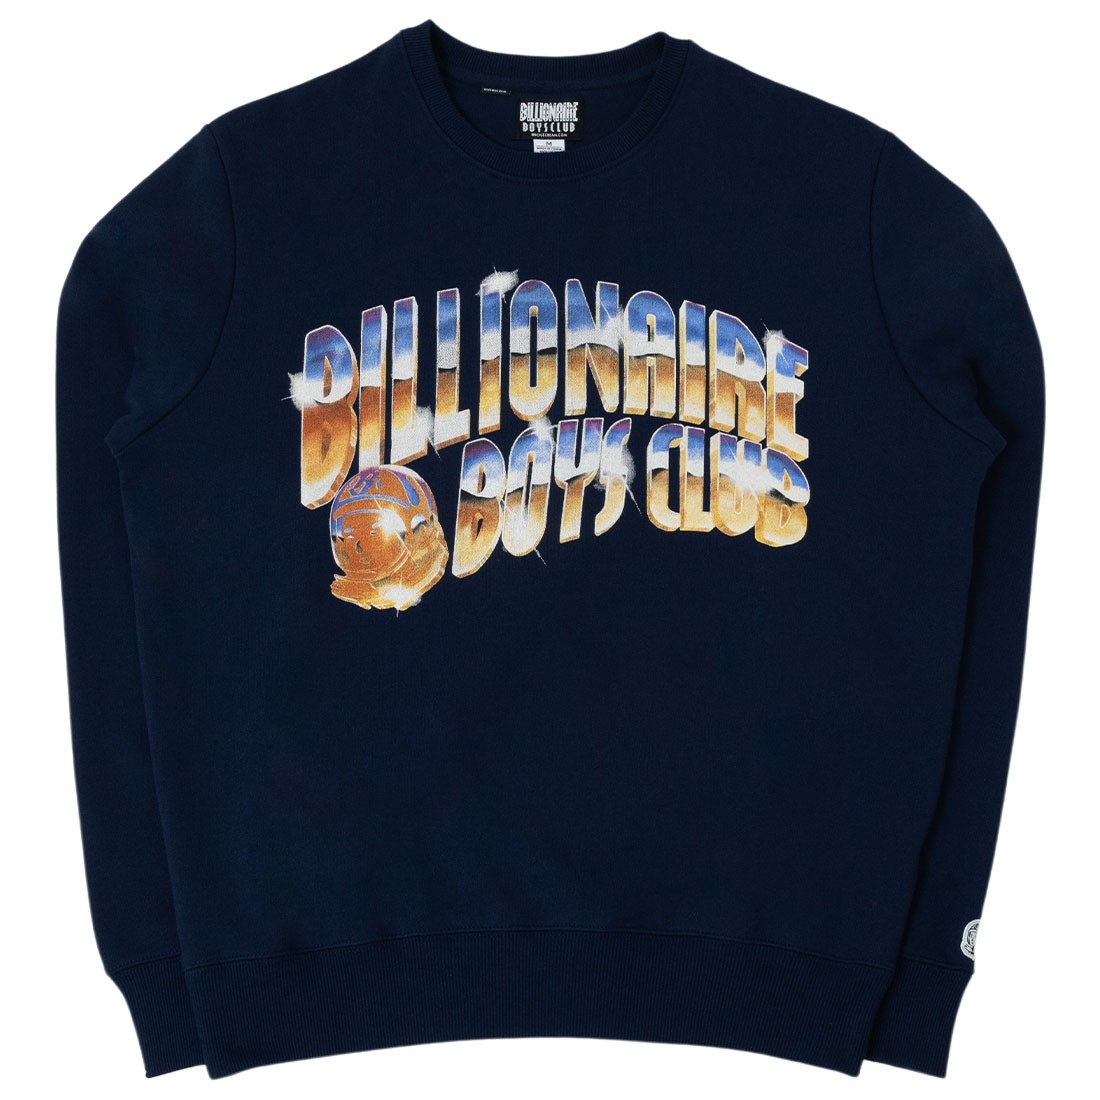 Shop the Billionaire Boys Club Men Chrome Sweatshirt at BAIT - baitme.com/billionaire-bo…